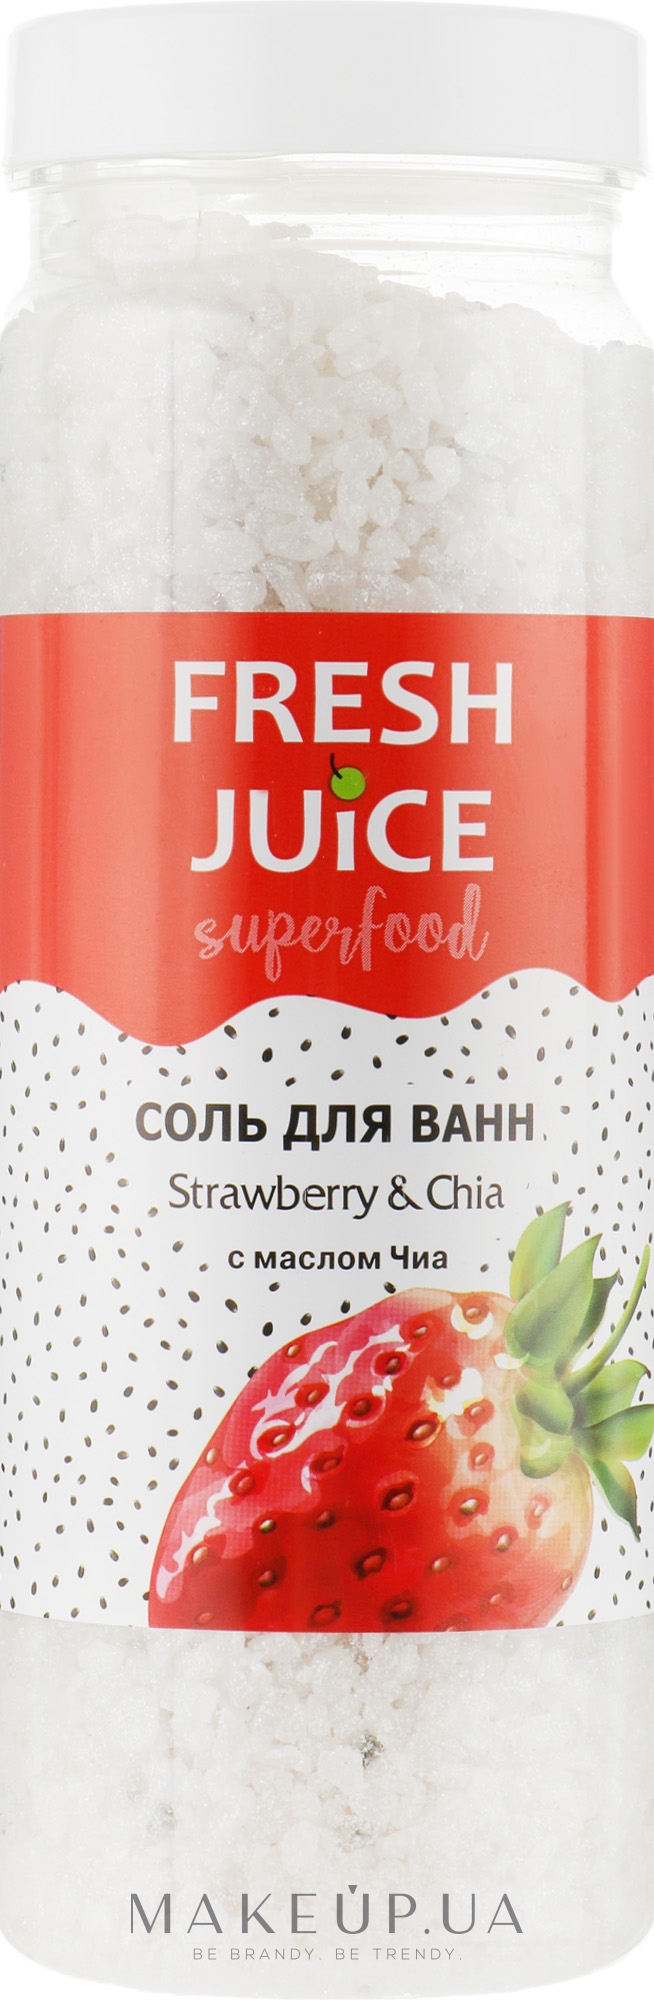 Соль для ванн "Клубника и Чиа" - Fresh Juice Superfood Strawberry & Chia  — фото 700g